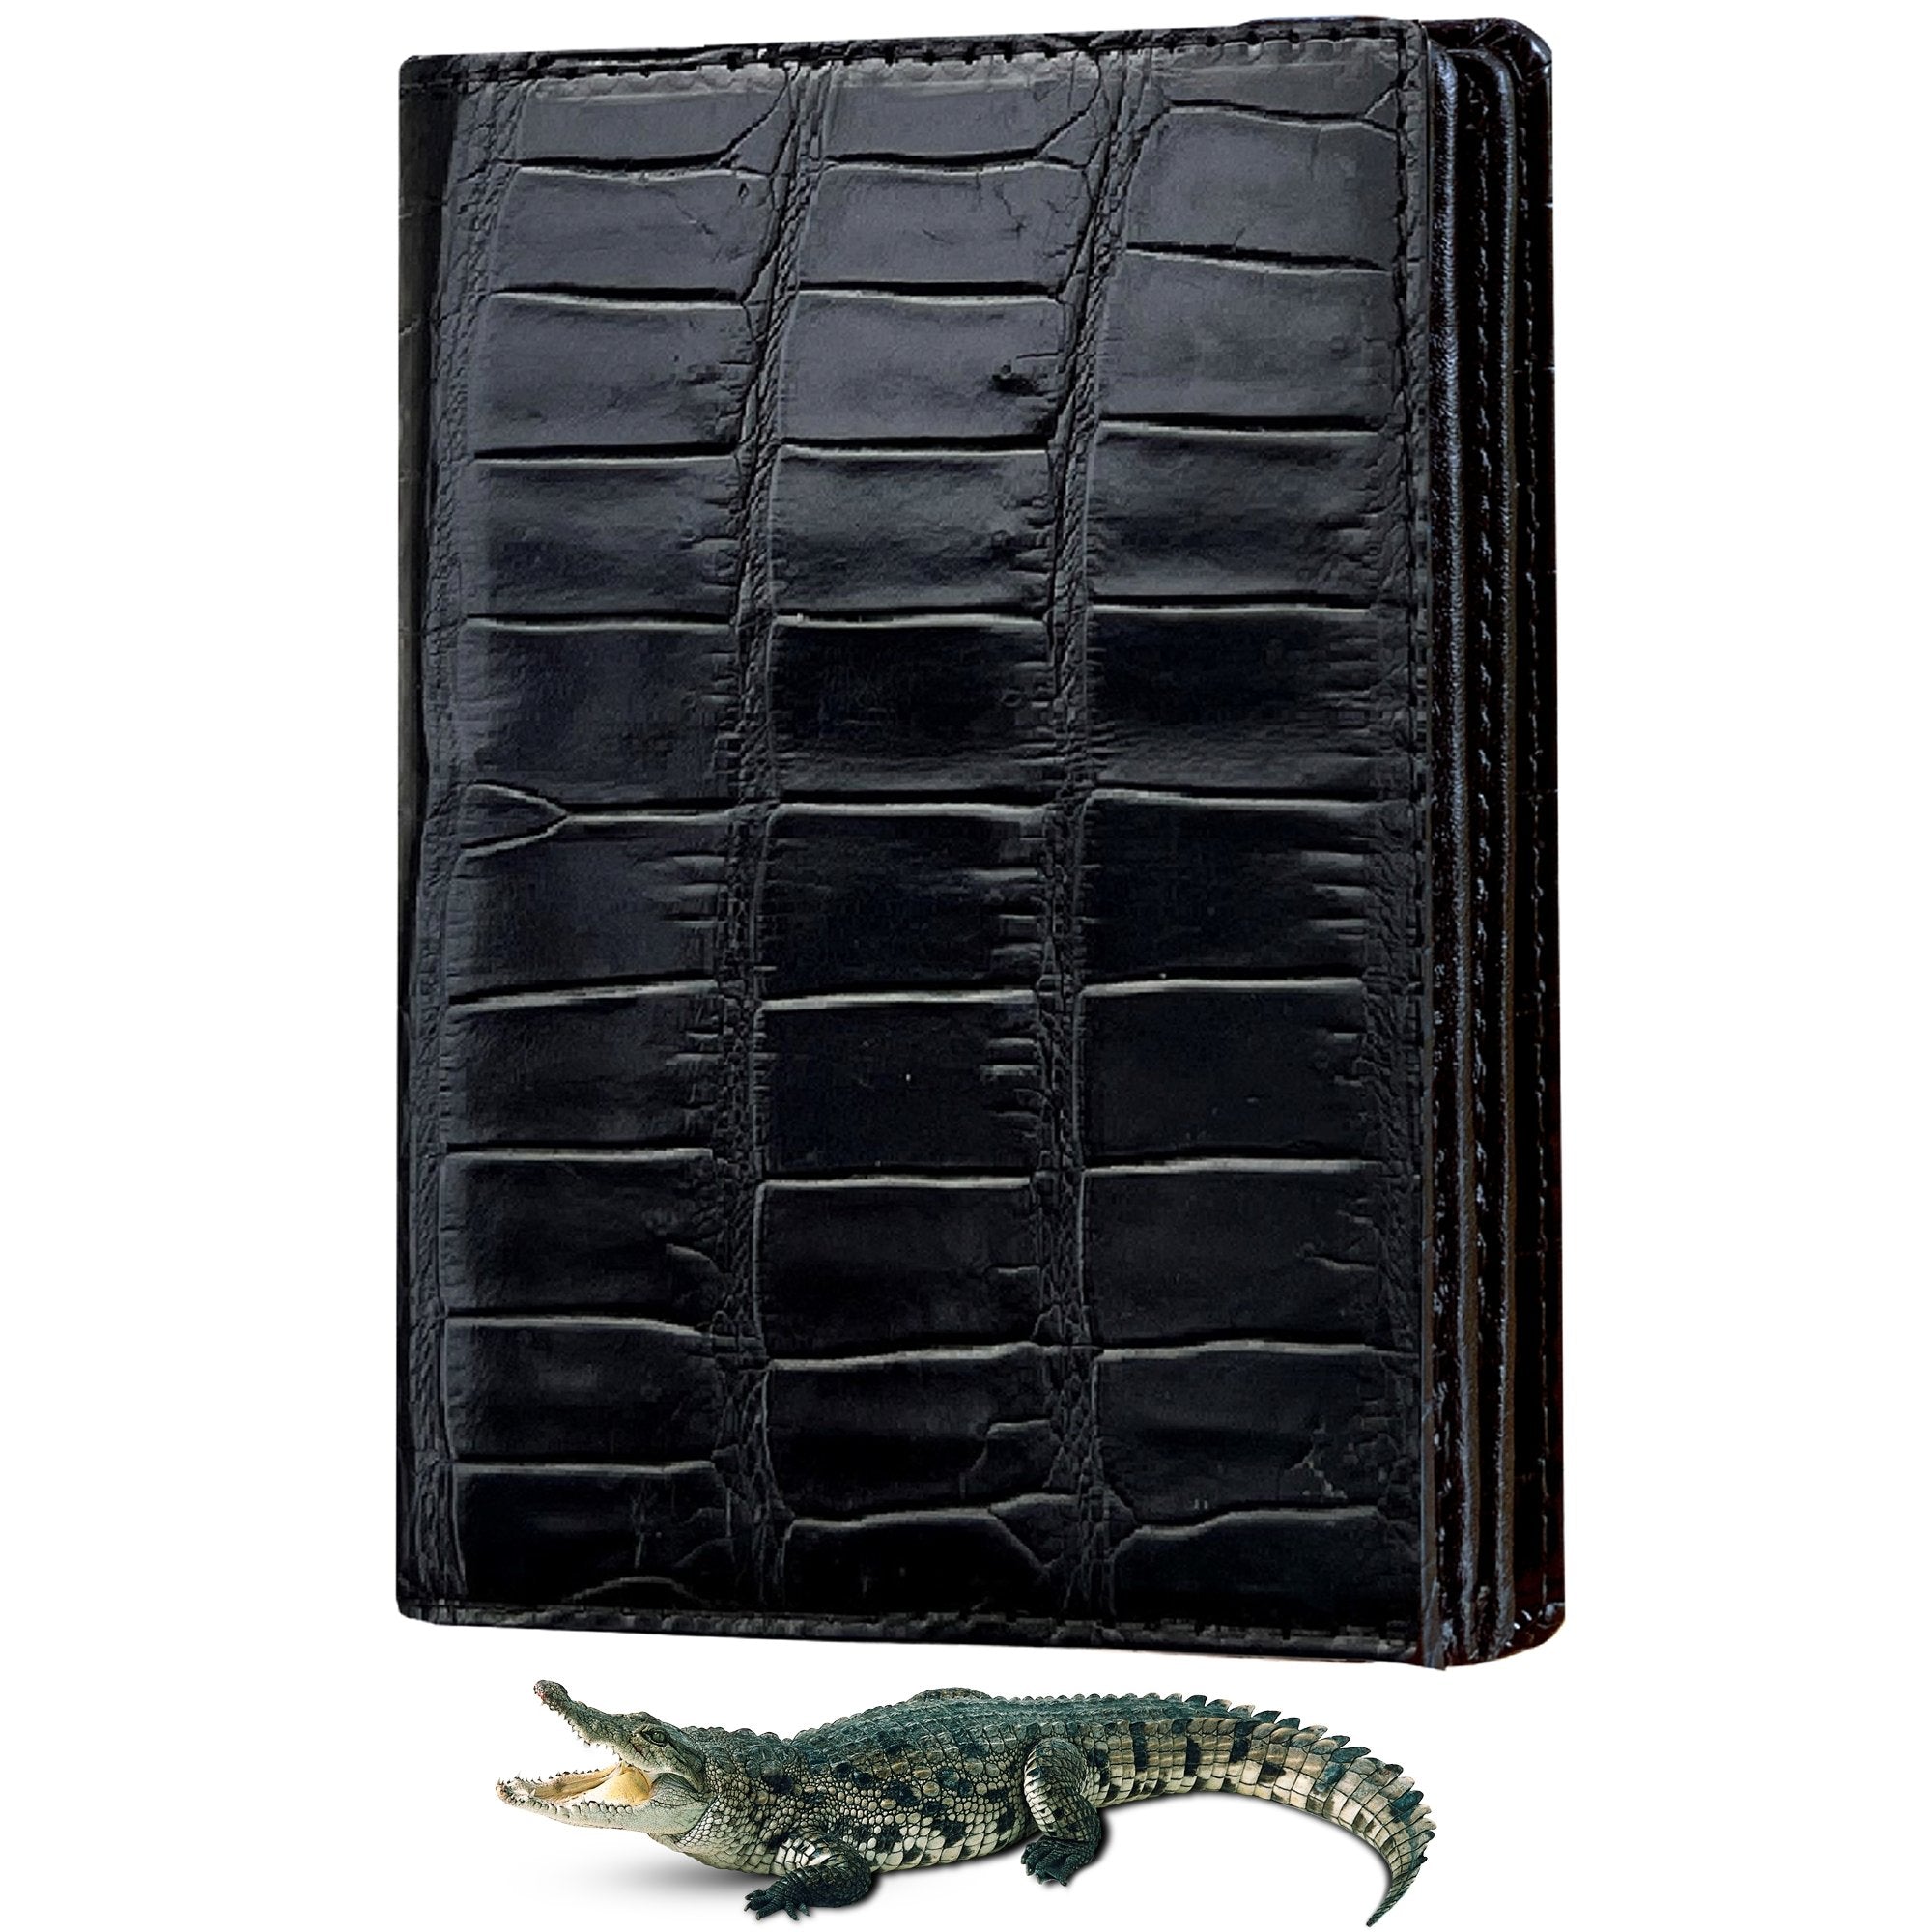 Large Capacity Alligator Leather Vertical Bifold Wallet | Crocodile Credit Card Holder for Men with 15 Card Slots | Black DUN11 - Vinacreations